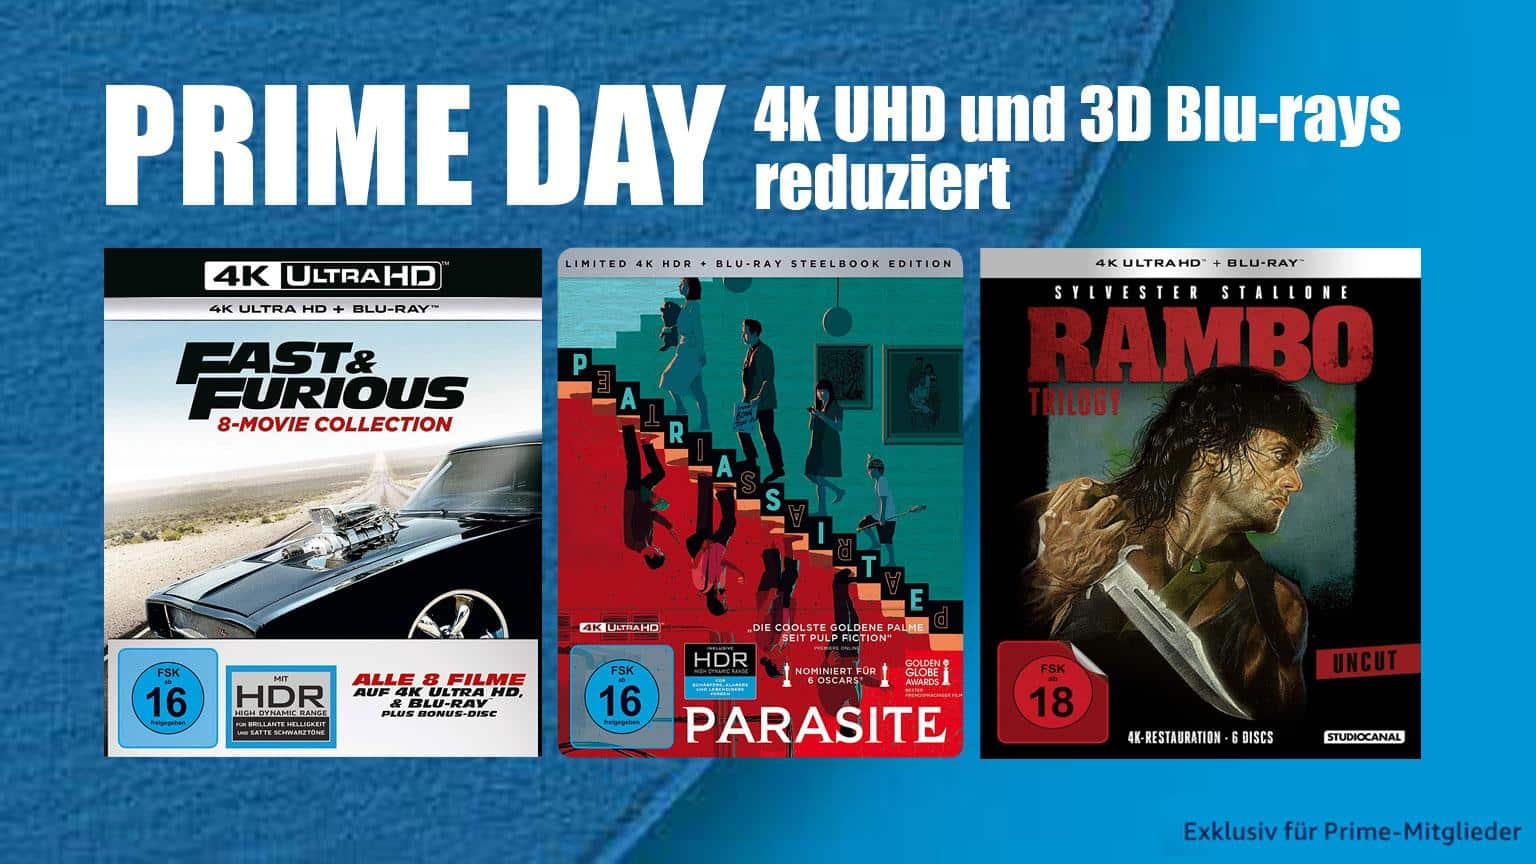 Prime Day 2020 4K UHD & 3D Blu-ray reduziert Deal Amazon.de sparen kaufen shop Artikelbild